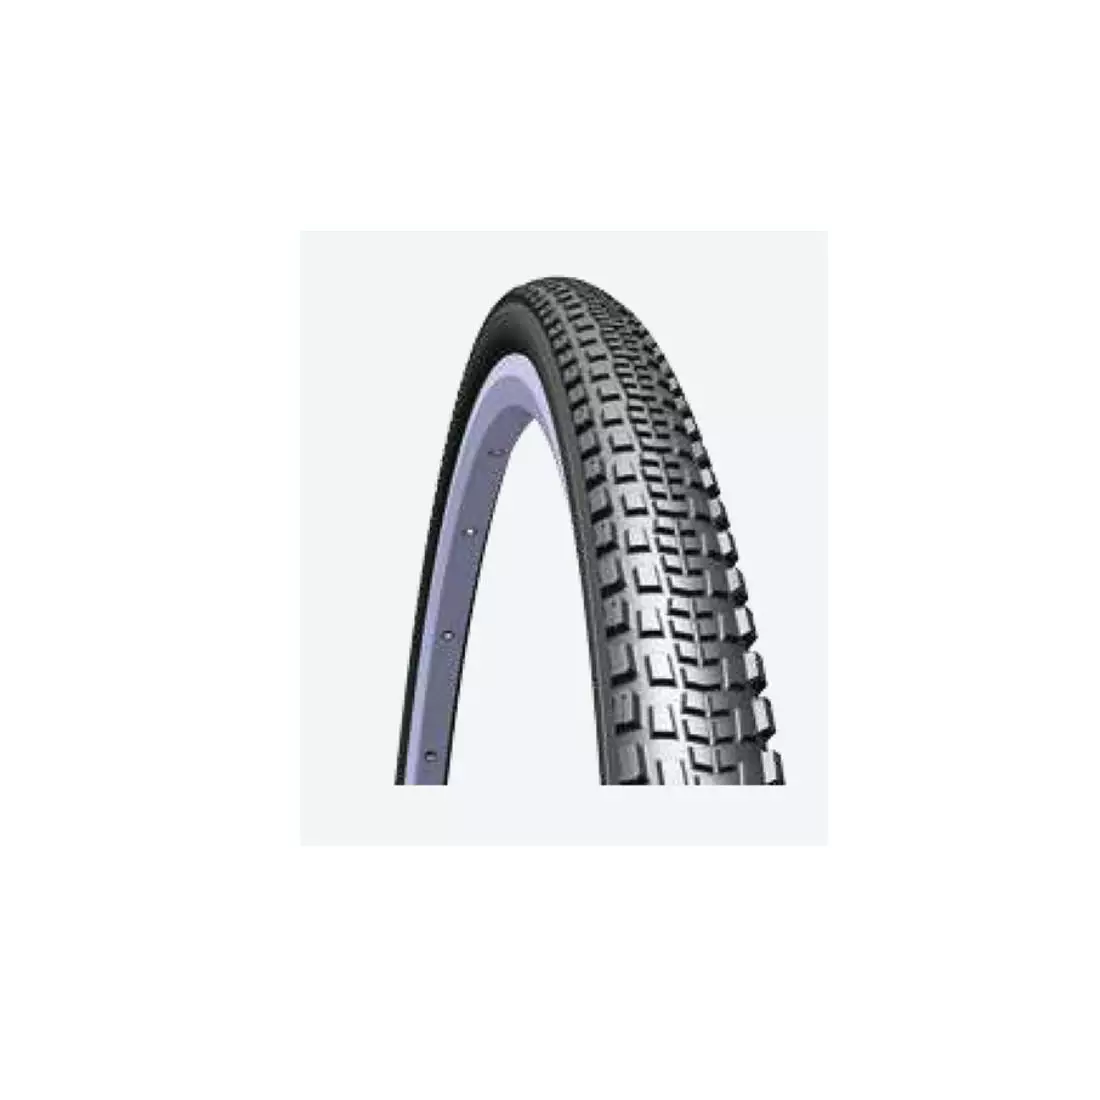 MITAS bicycle tyre x-road ts R17 33-622 